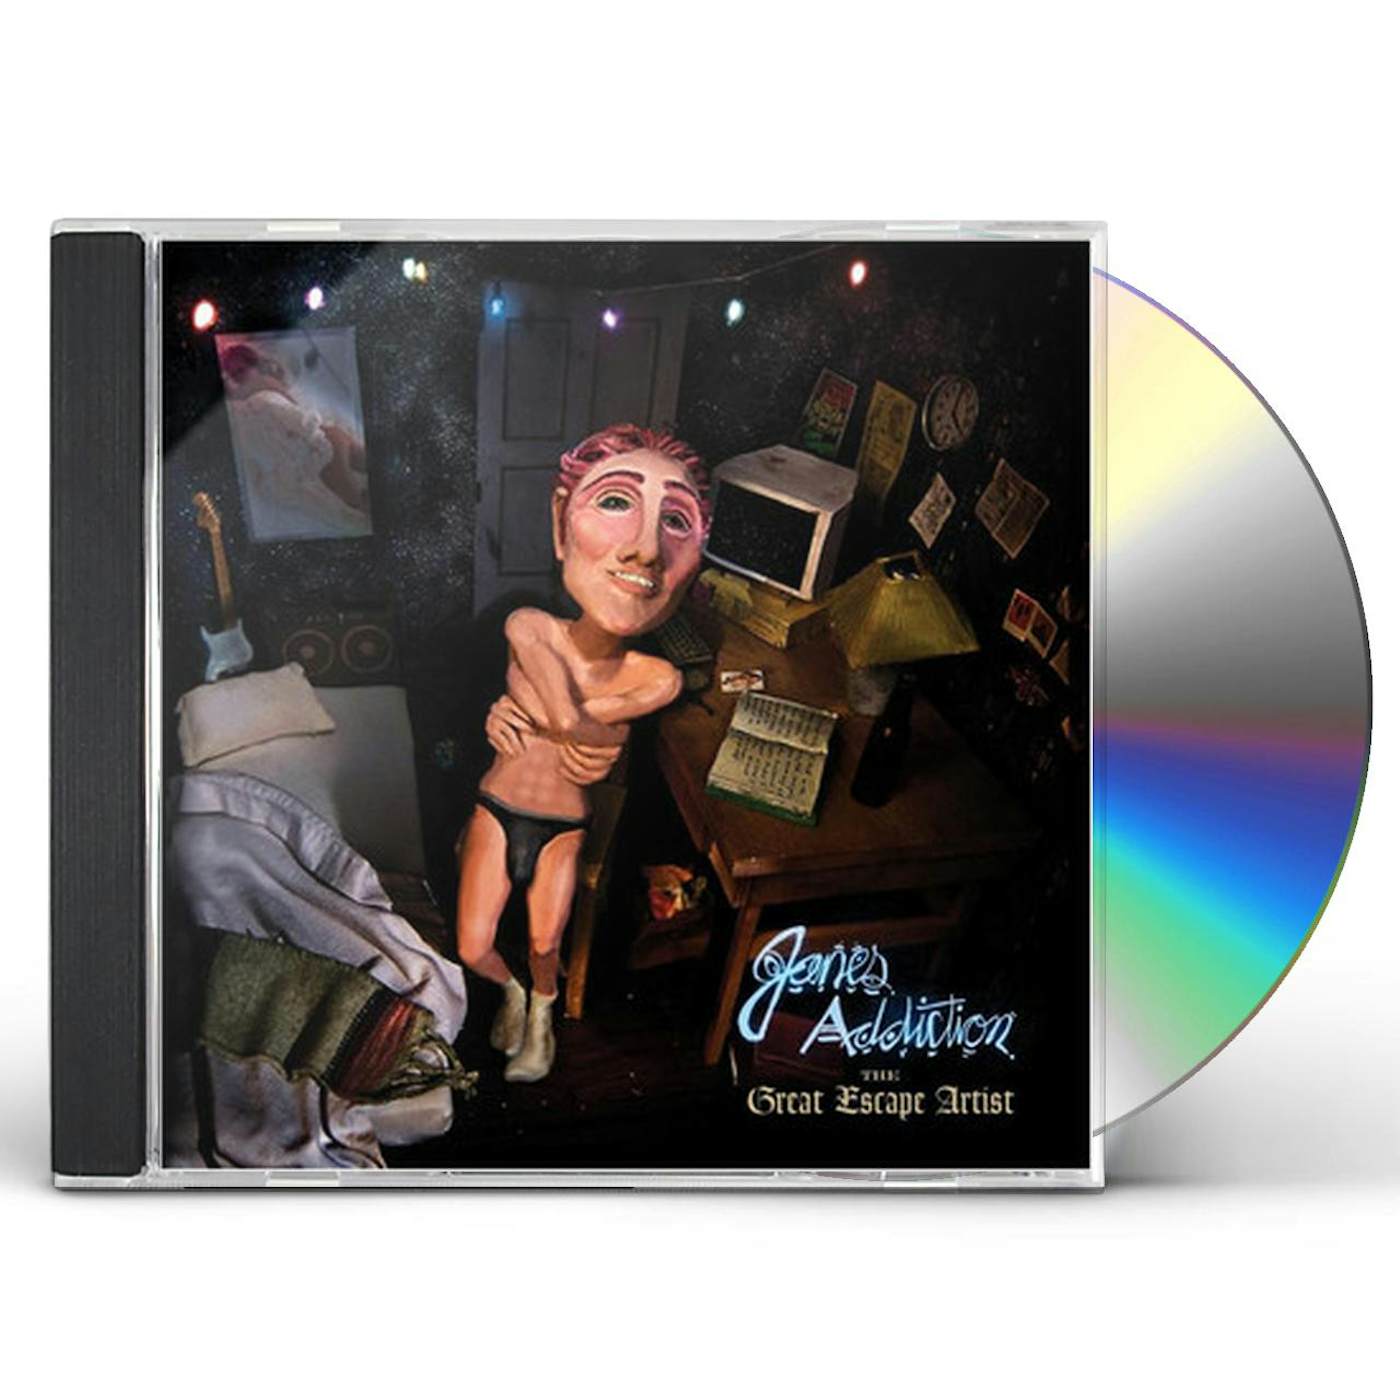 Jane's Addiction GREAT ESCAPE ARTIST CD